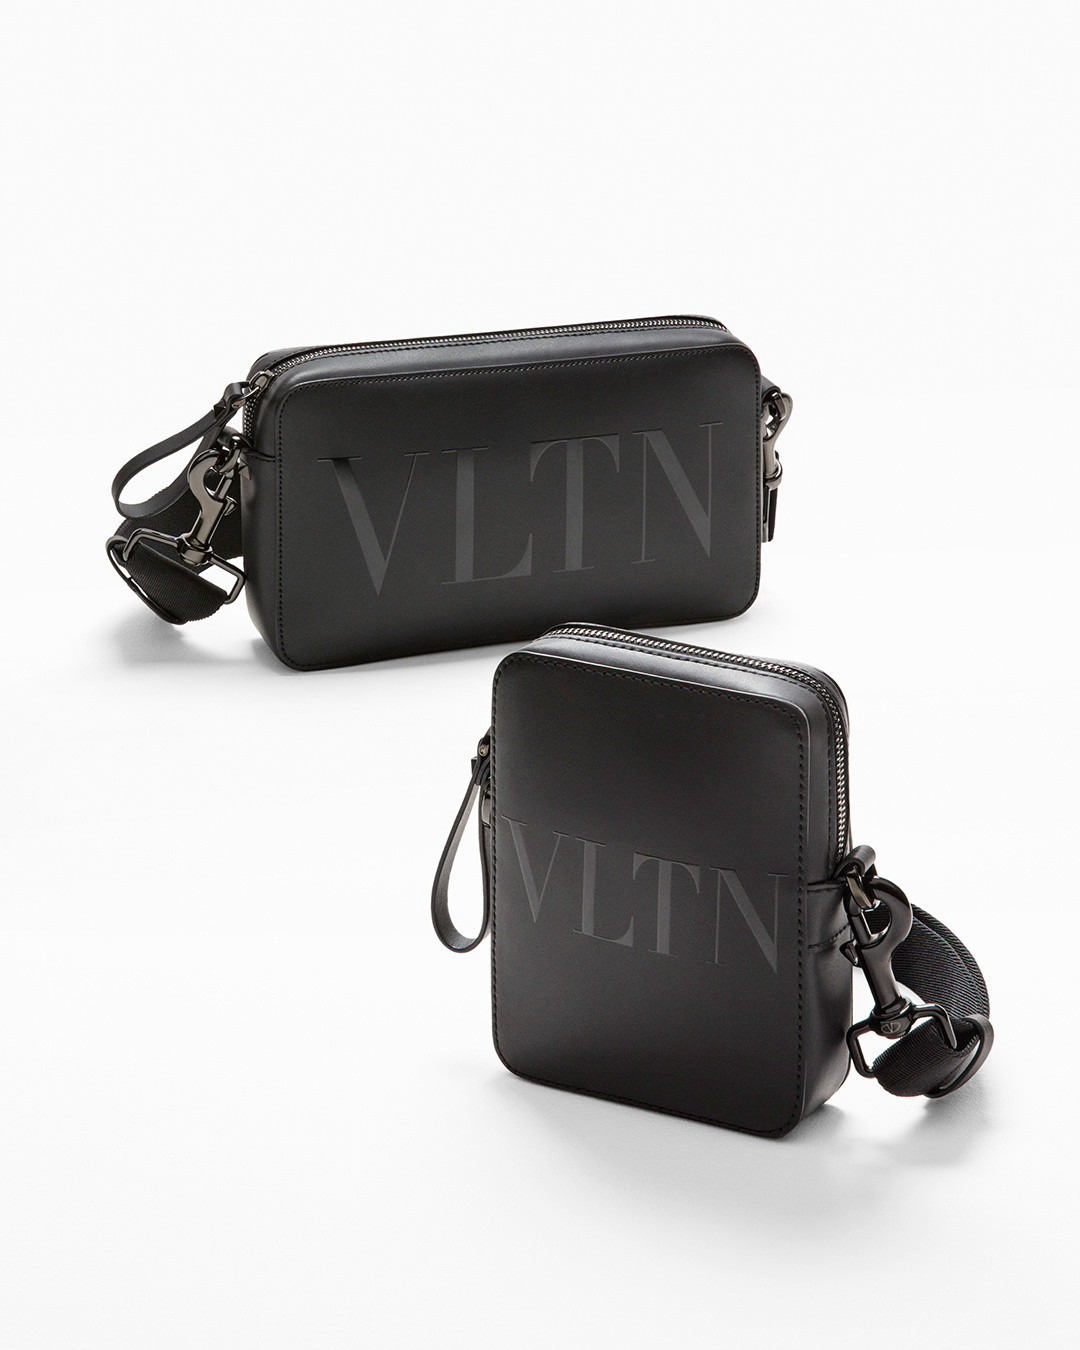 Valentino Online Boutique: the Maison site